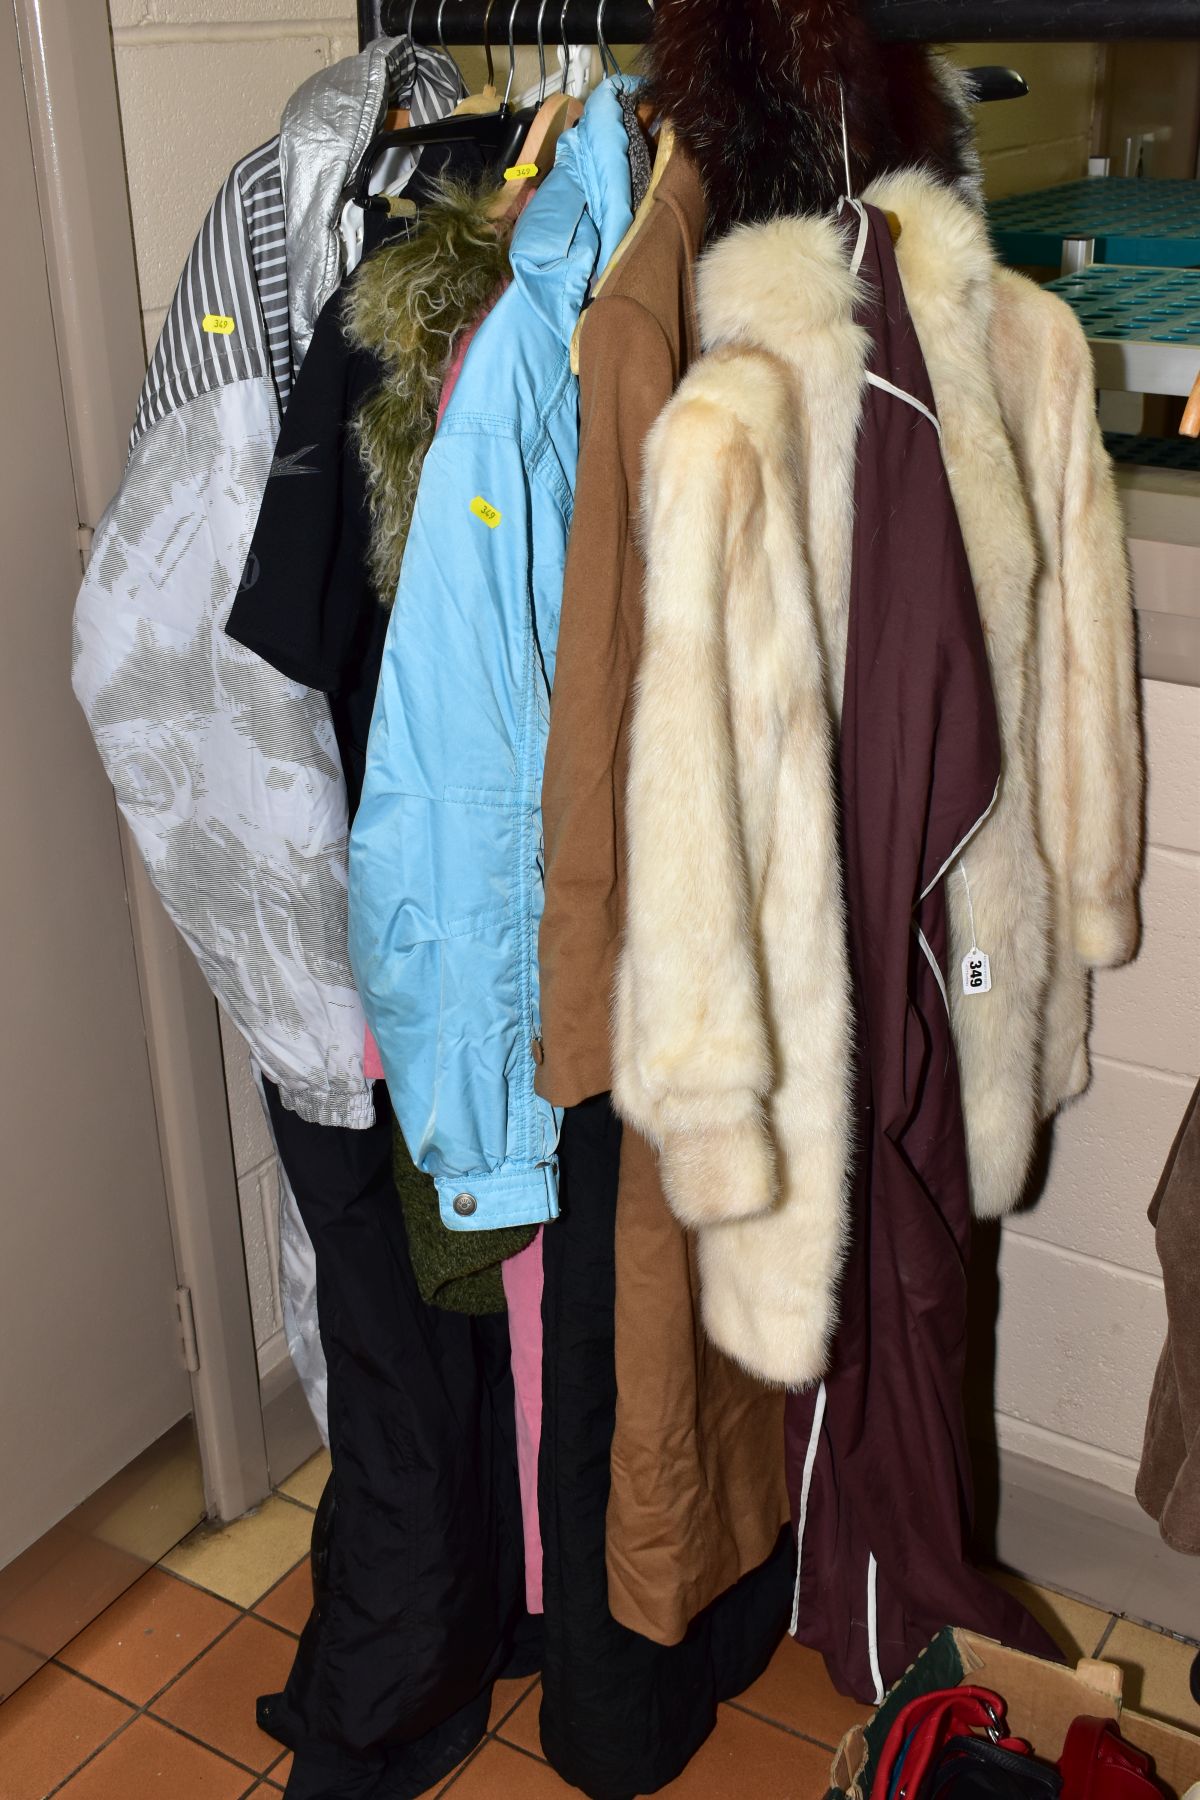 LADIES CLOTHES, to include a white mink fur coat, measurers 53cm arm pit to arm pit length 73cm,